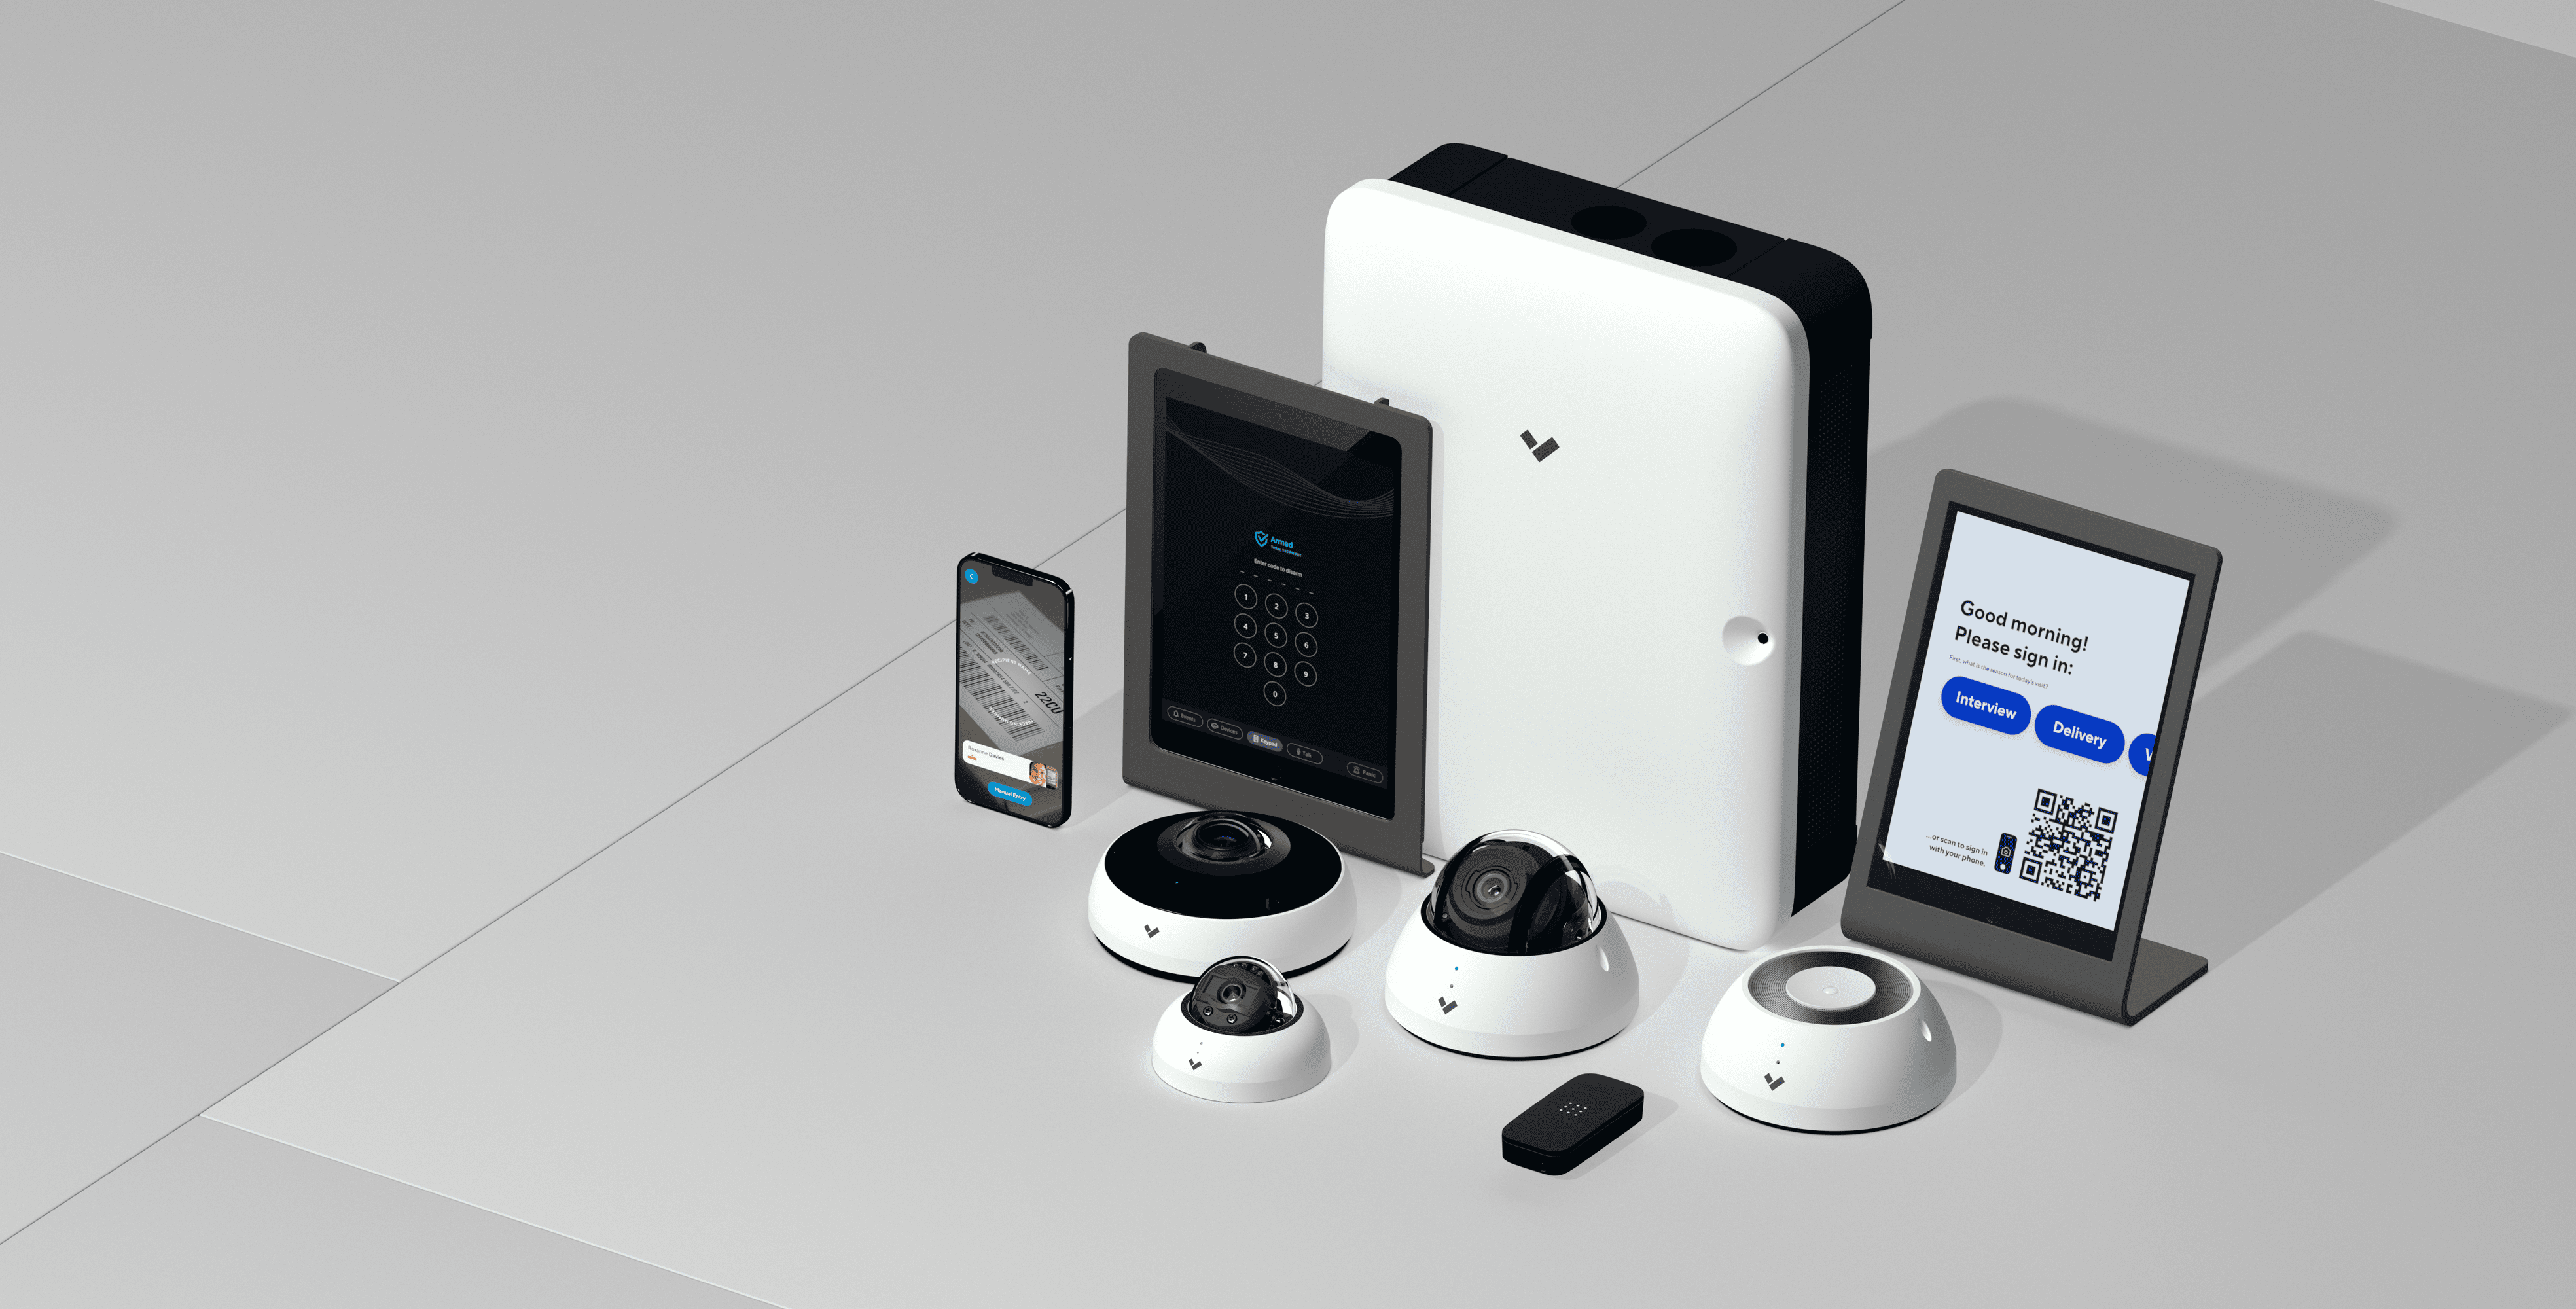 Verkada secuirty device family including CM61 Mini Dome camera